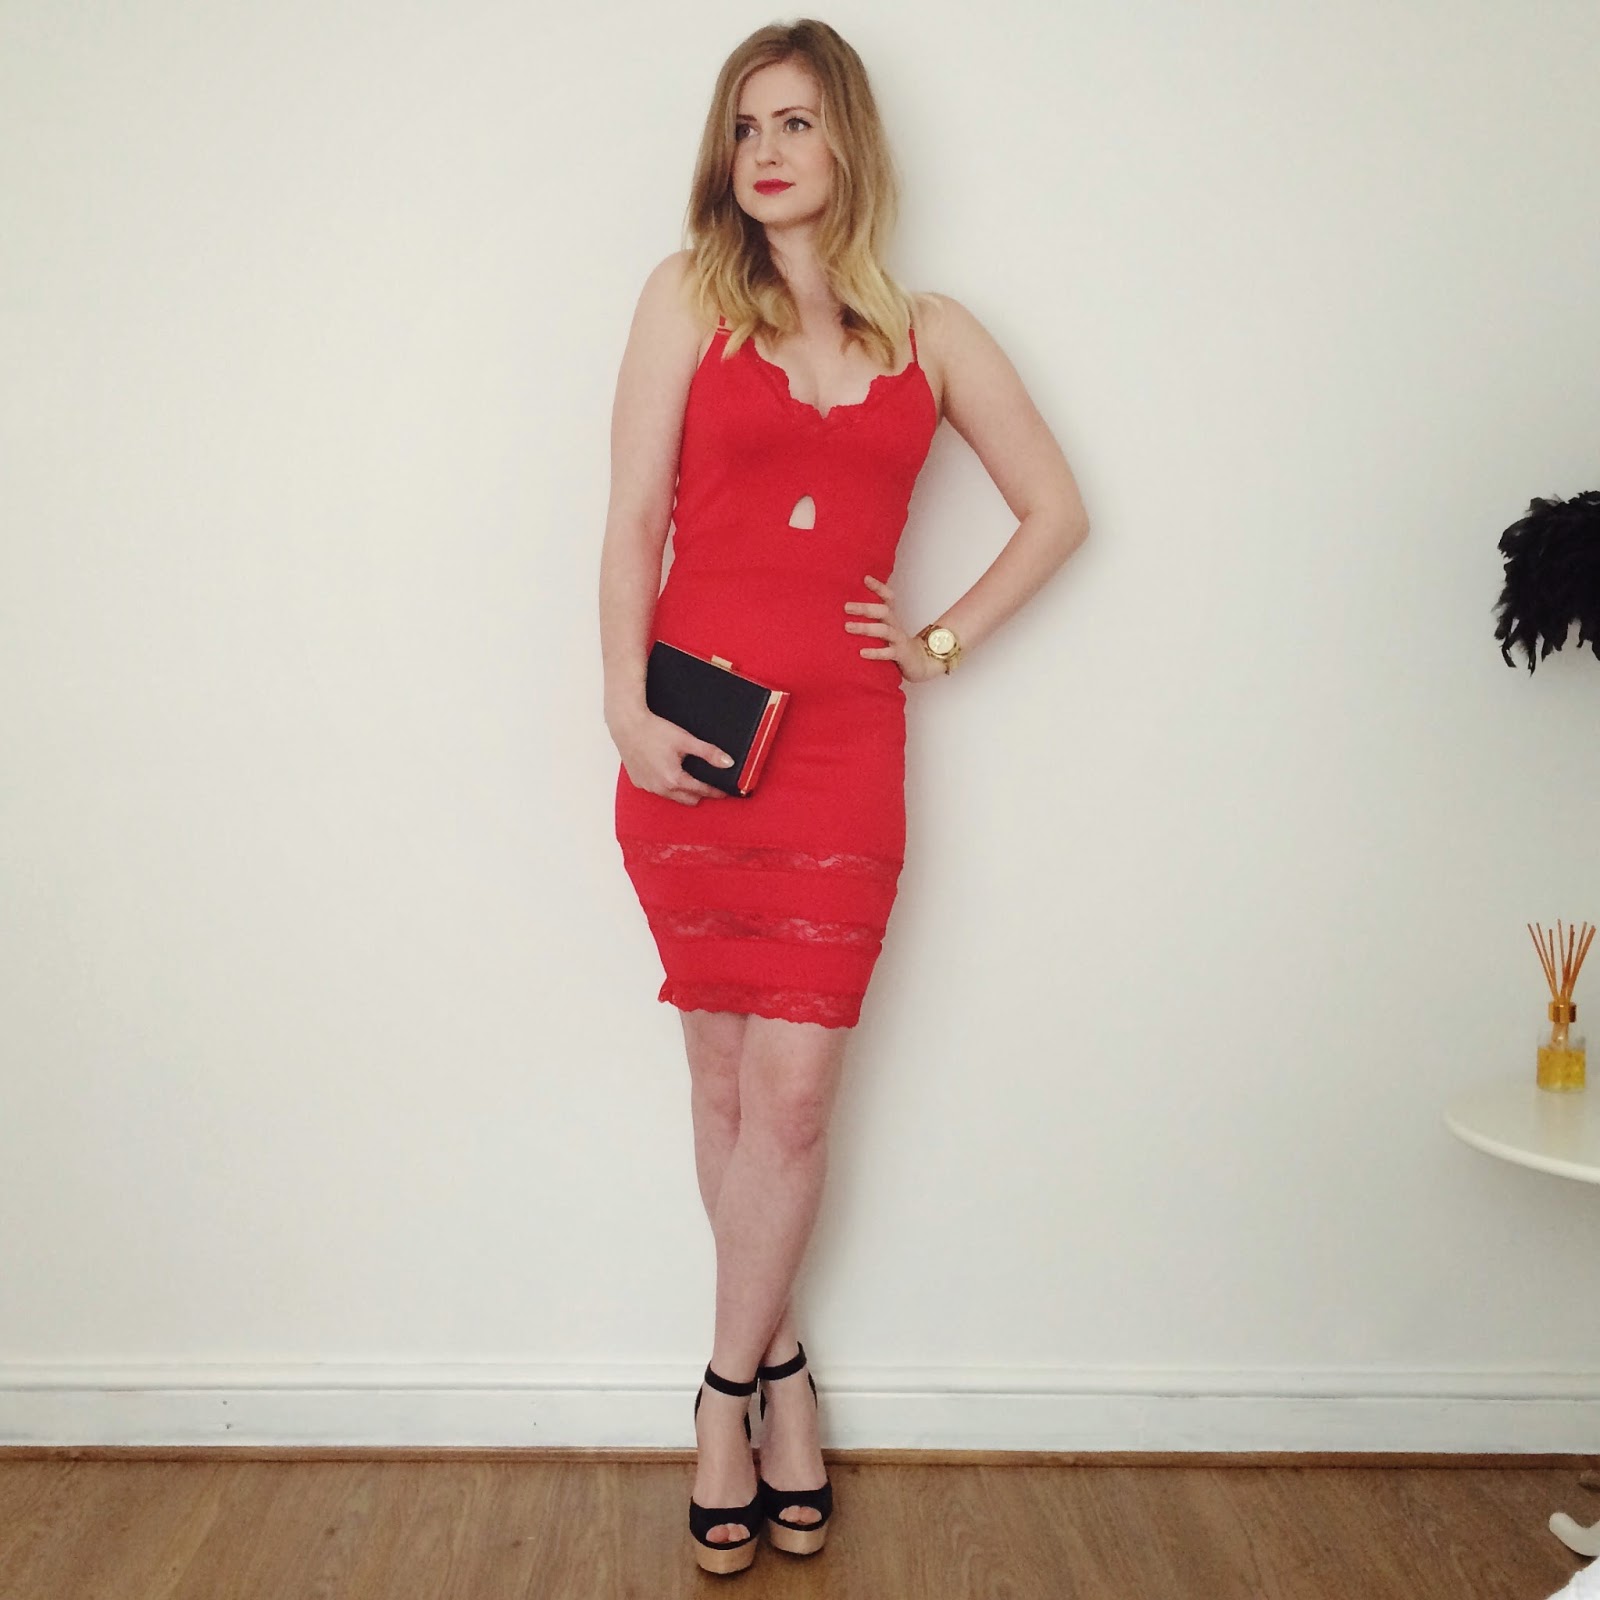 Celeblook review, Red lace dress, fashion bloggers, cocktail wear, FashionFake